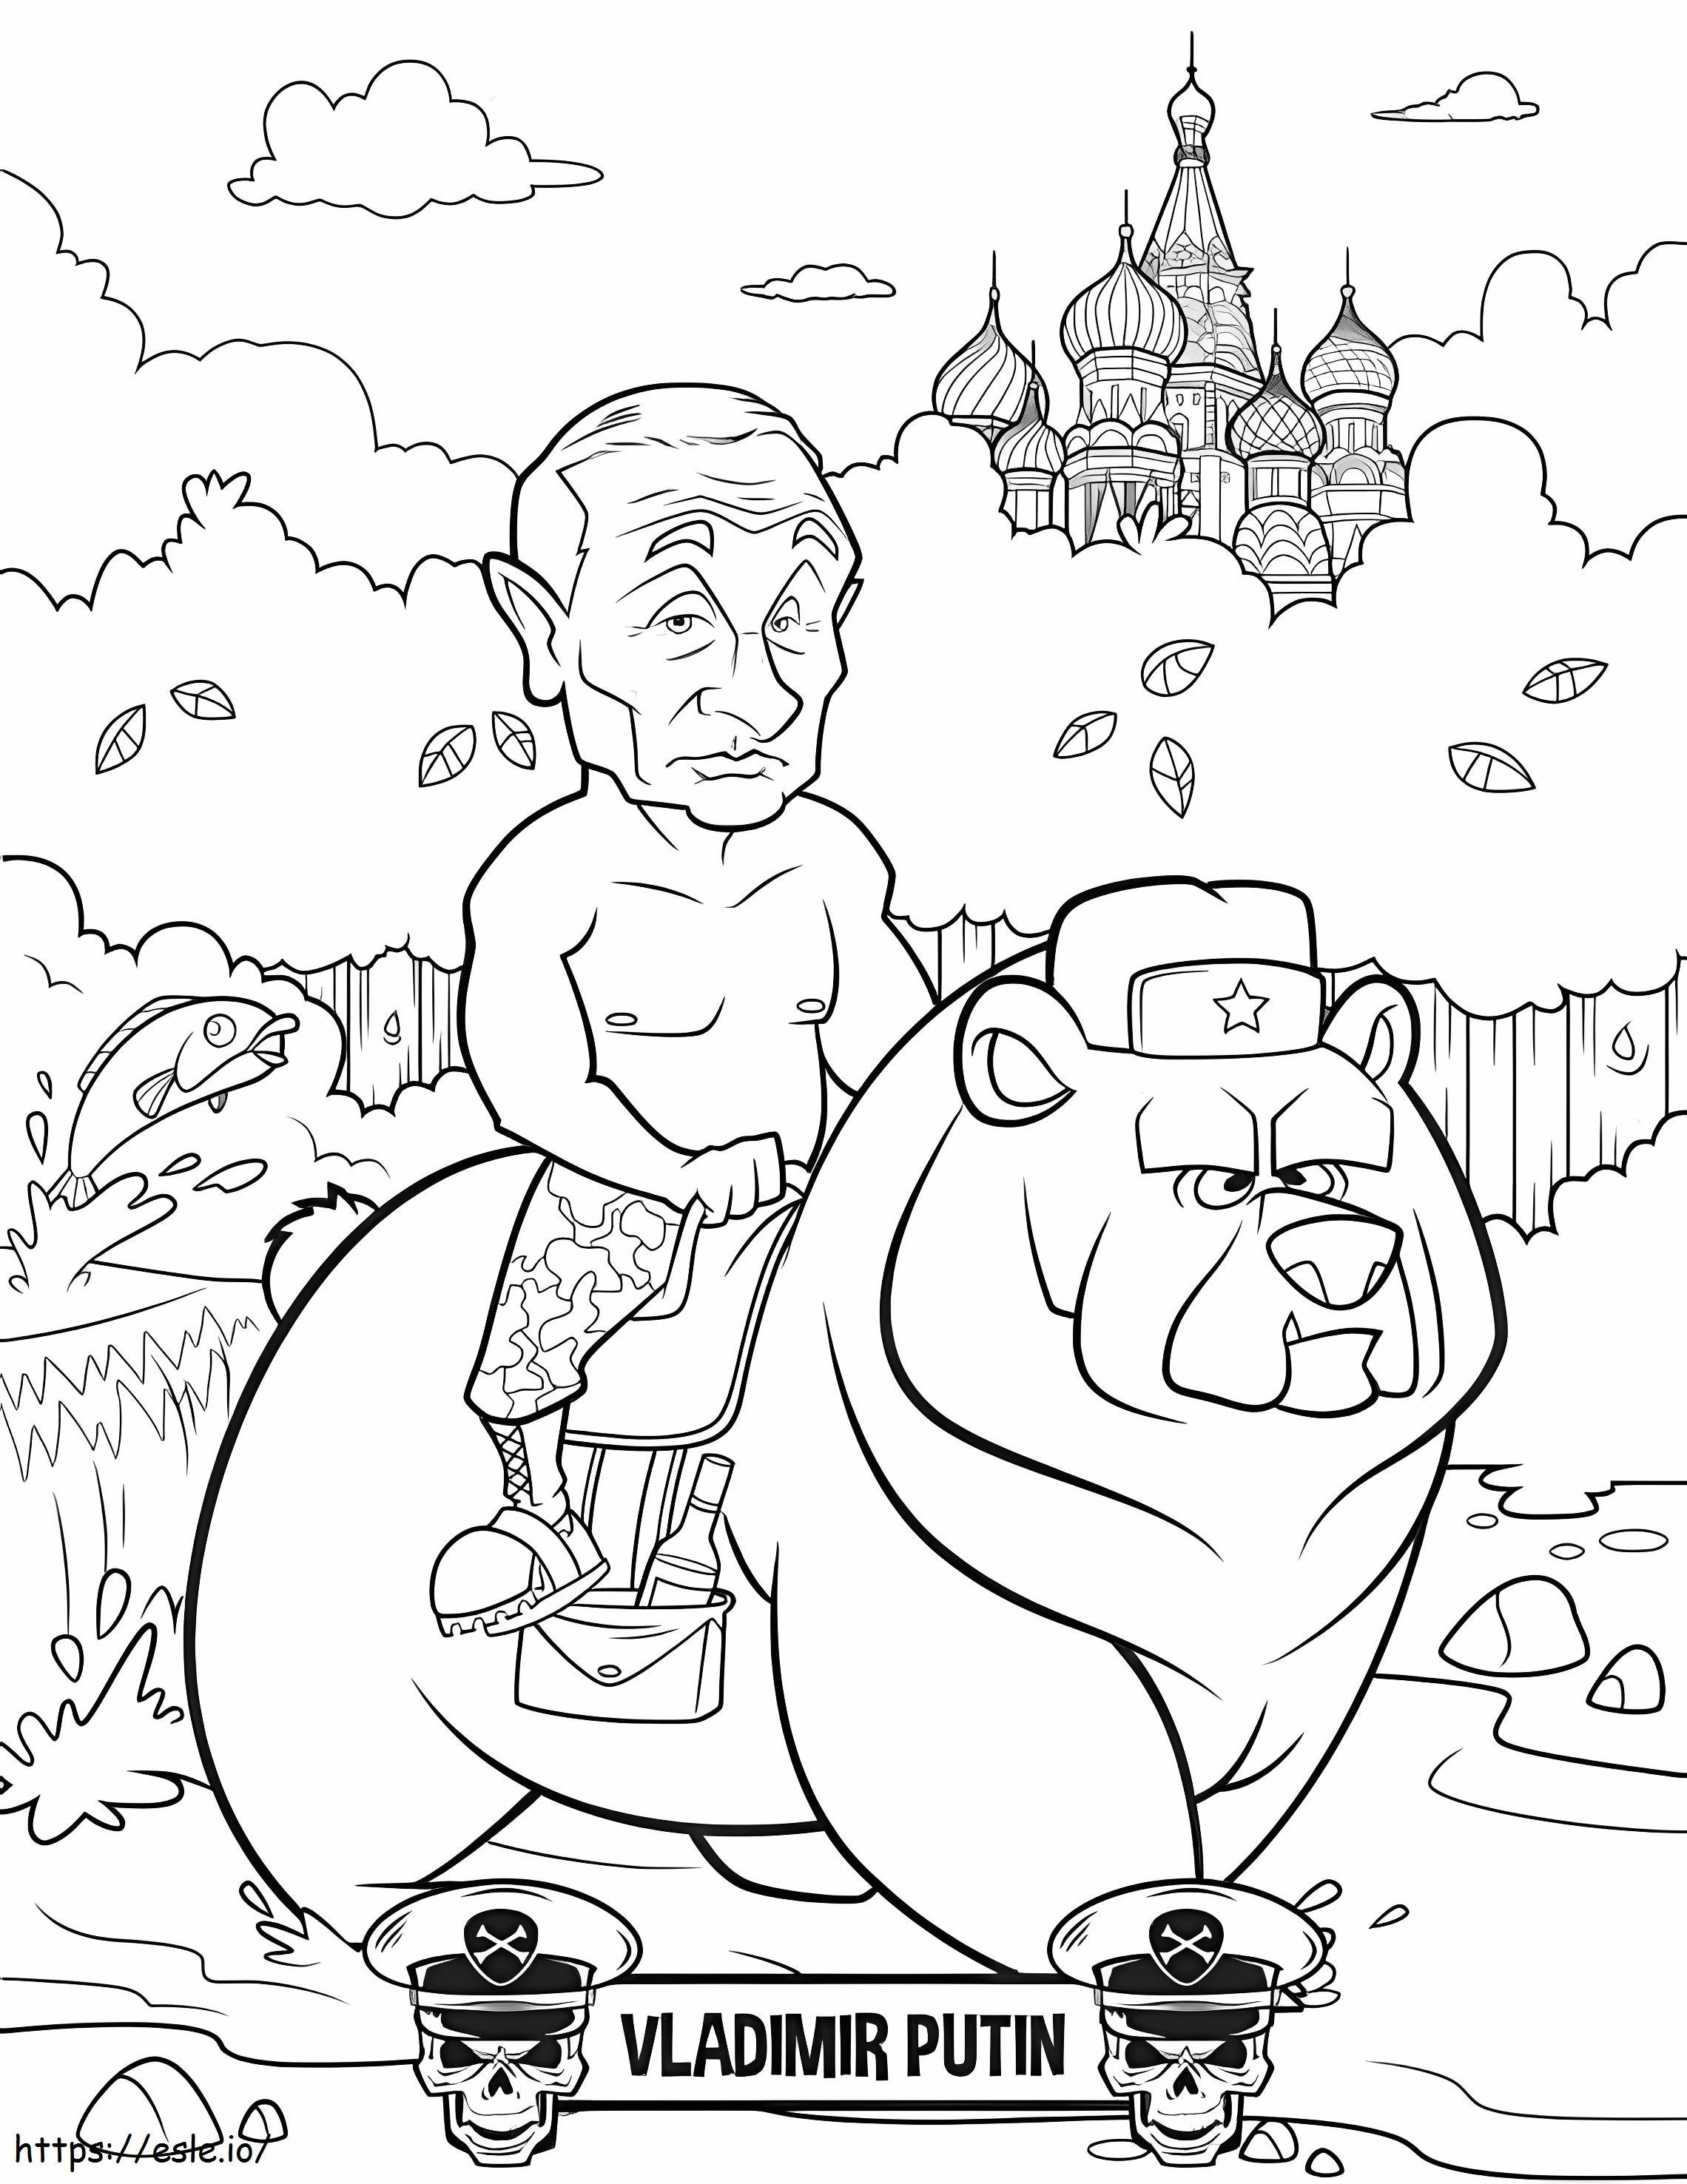 Funny Vladimir Putin coloring page